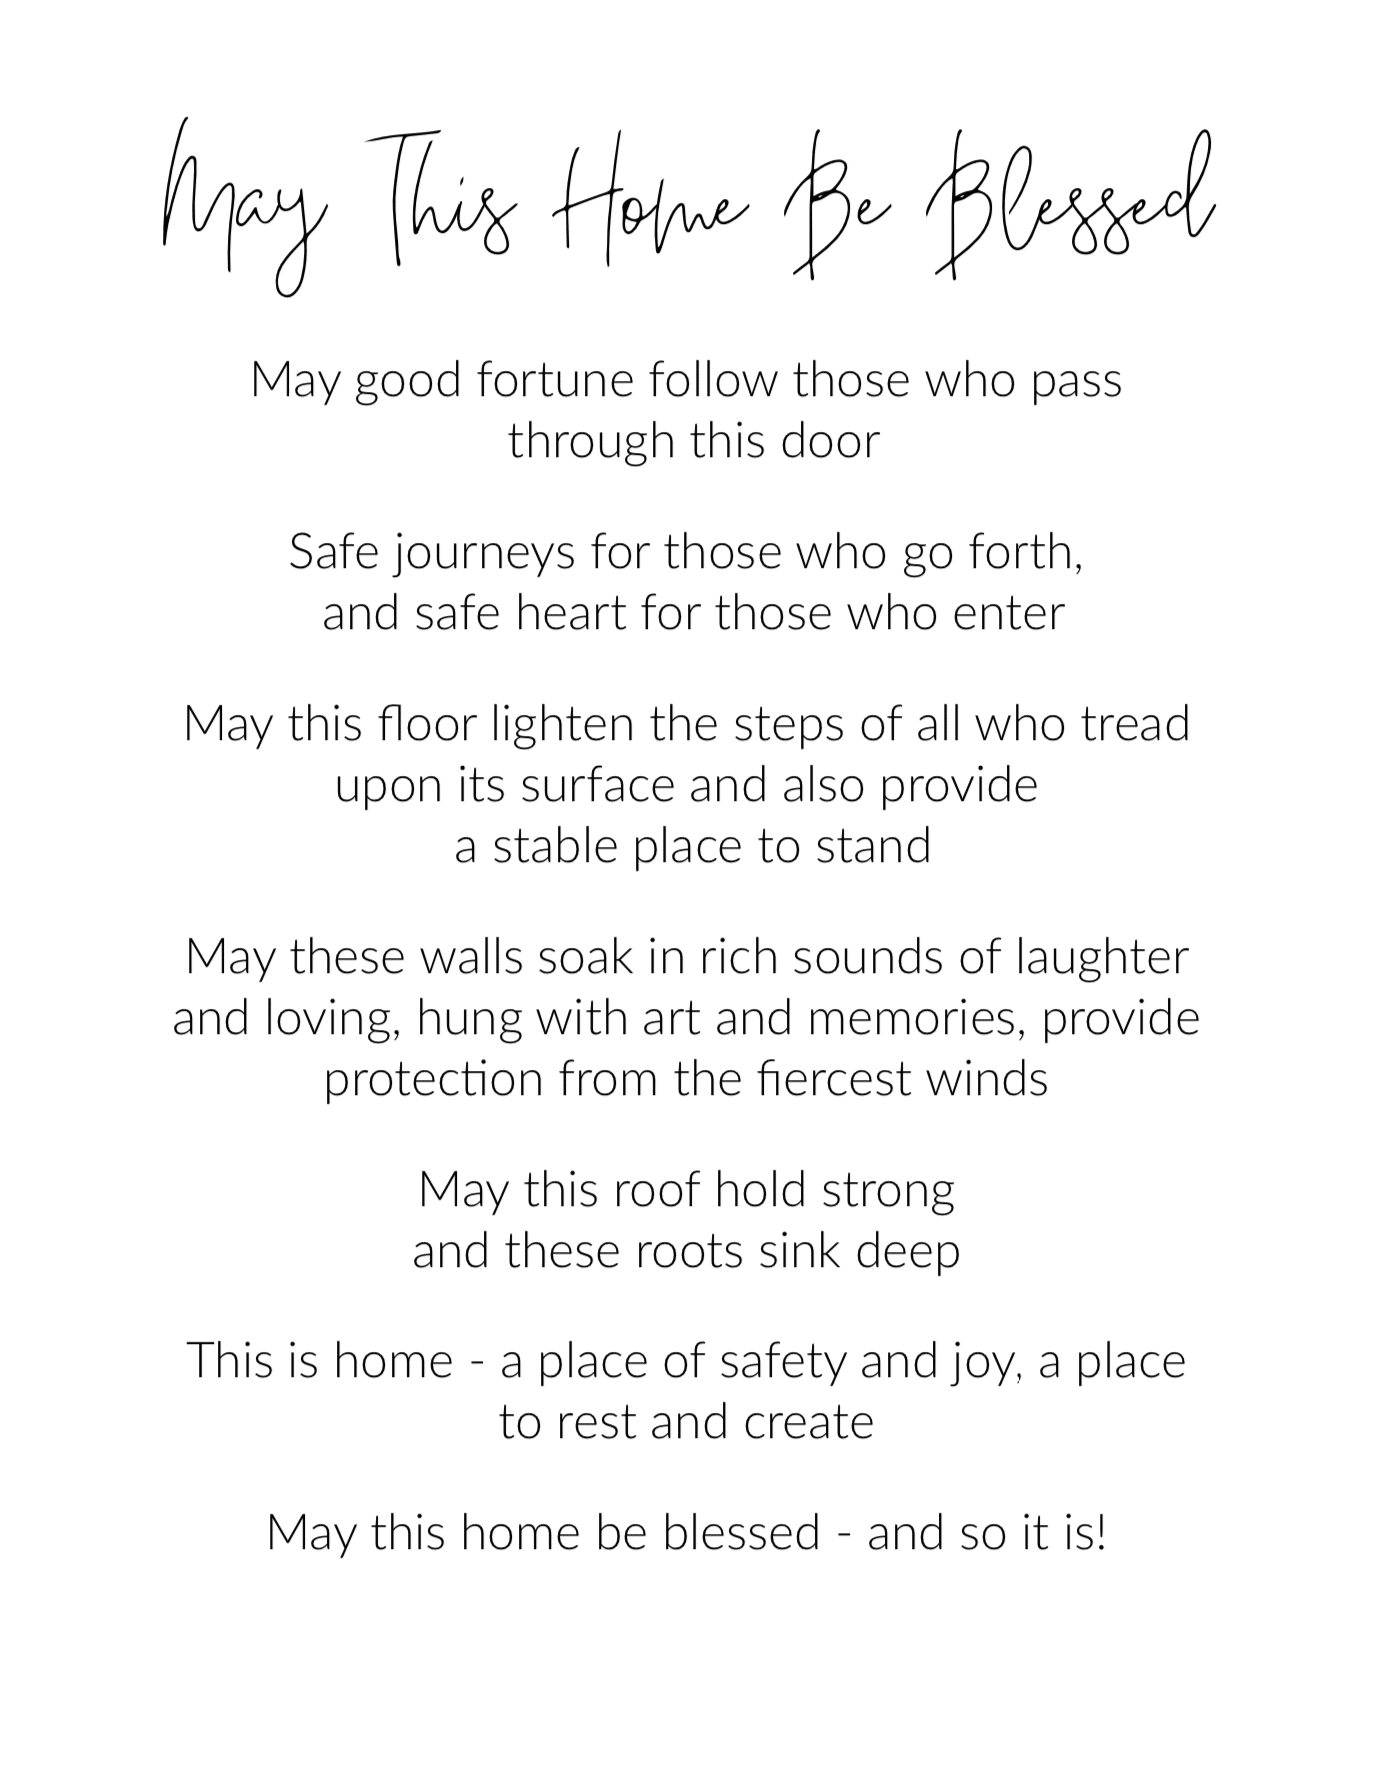 Home Blessing Printable Poem